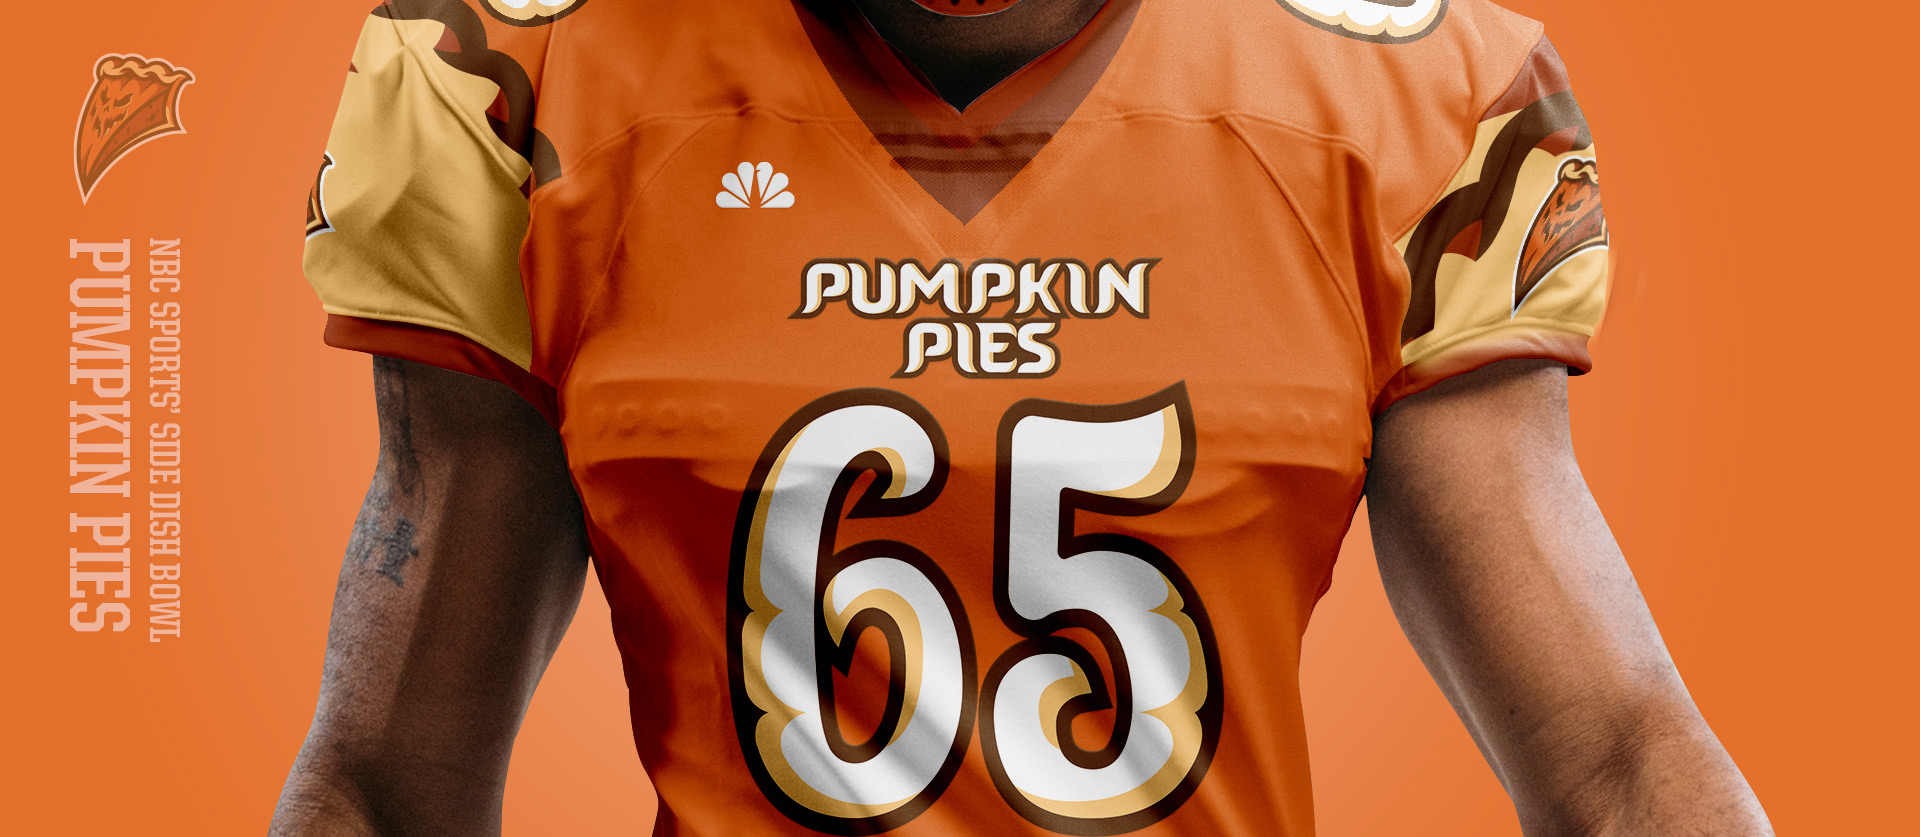 Pumpkin Pies Front - Football Uniform Design for NBC Sports Thanksgiving Side Dish Bowl